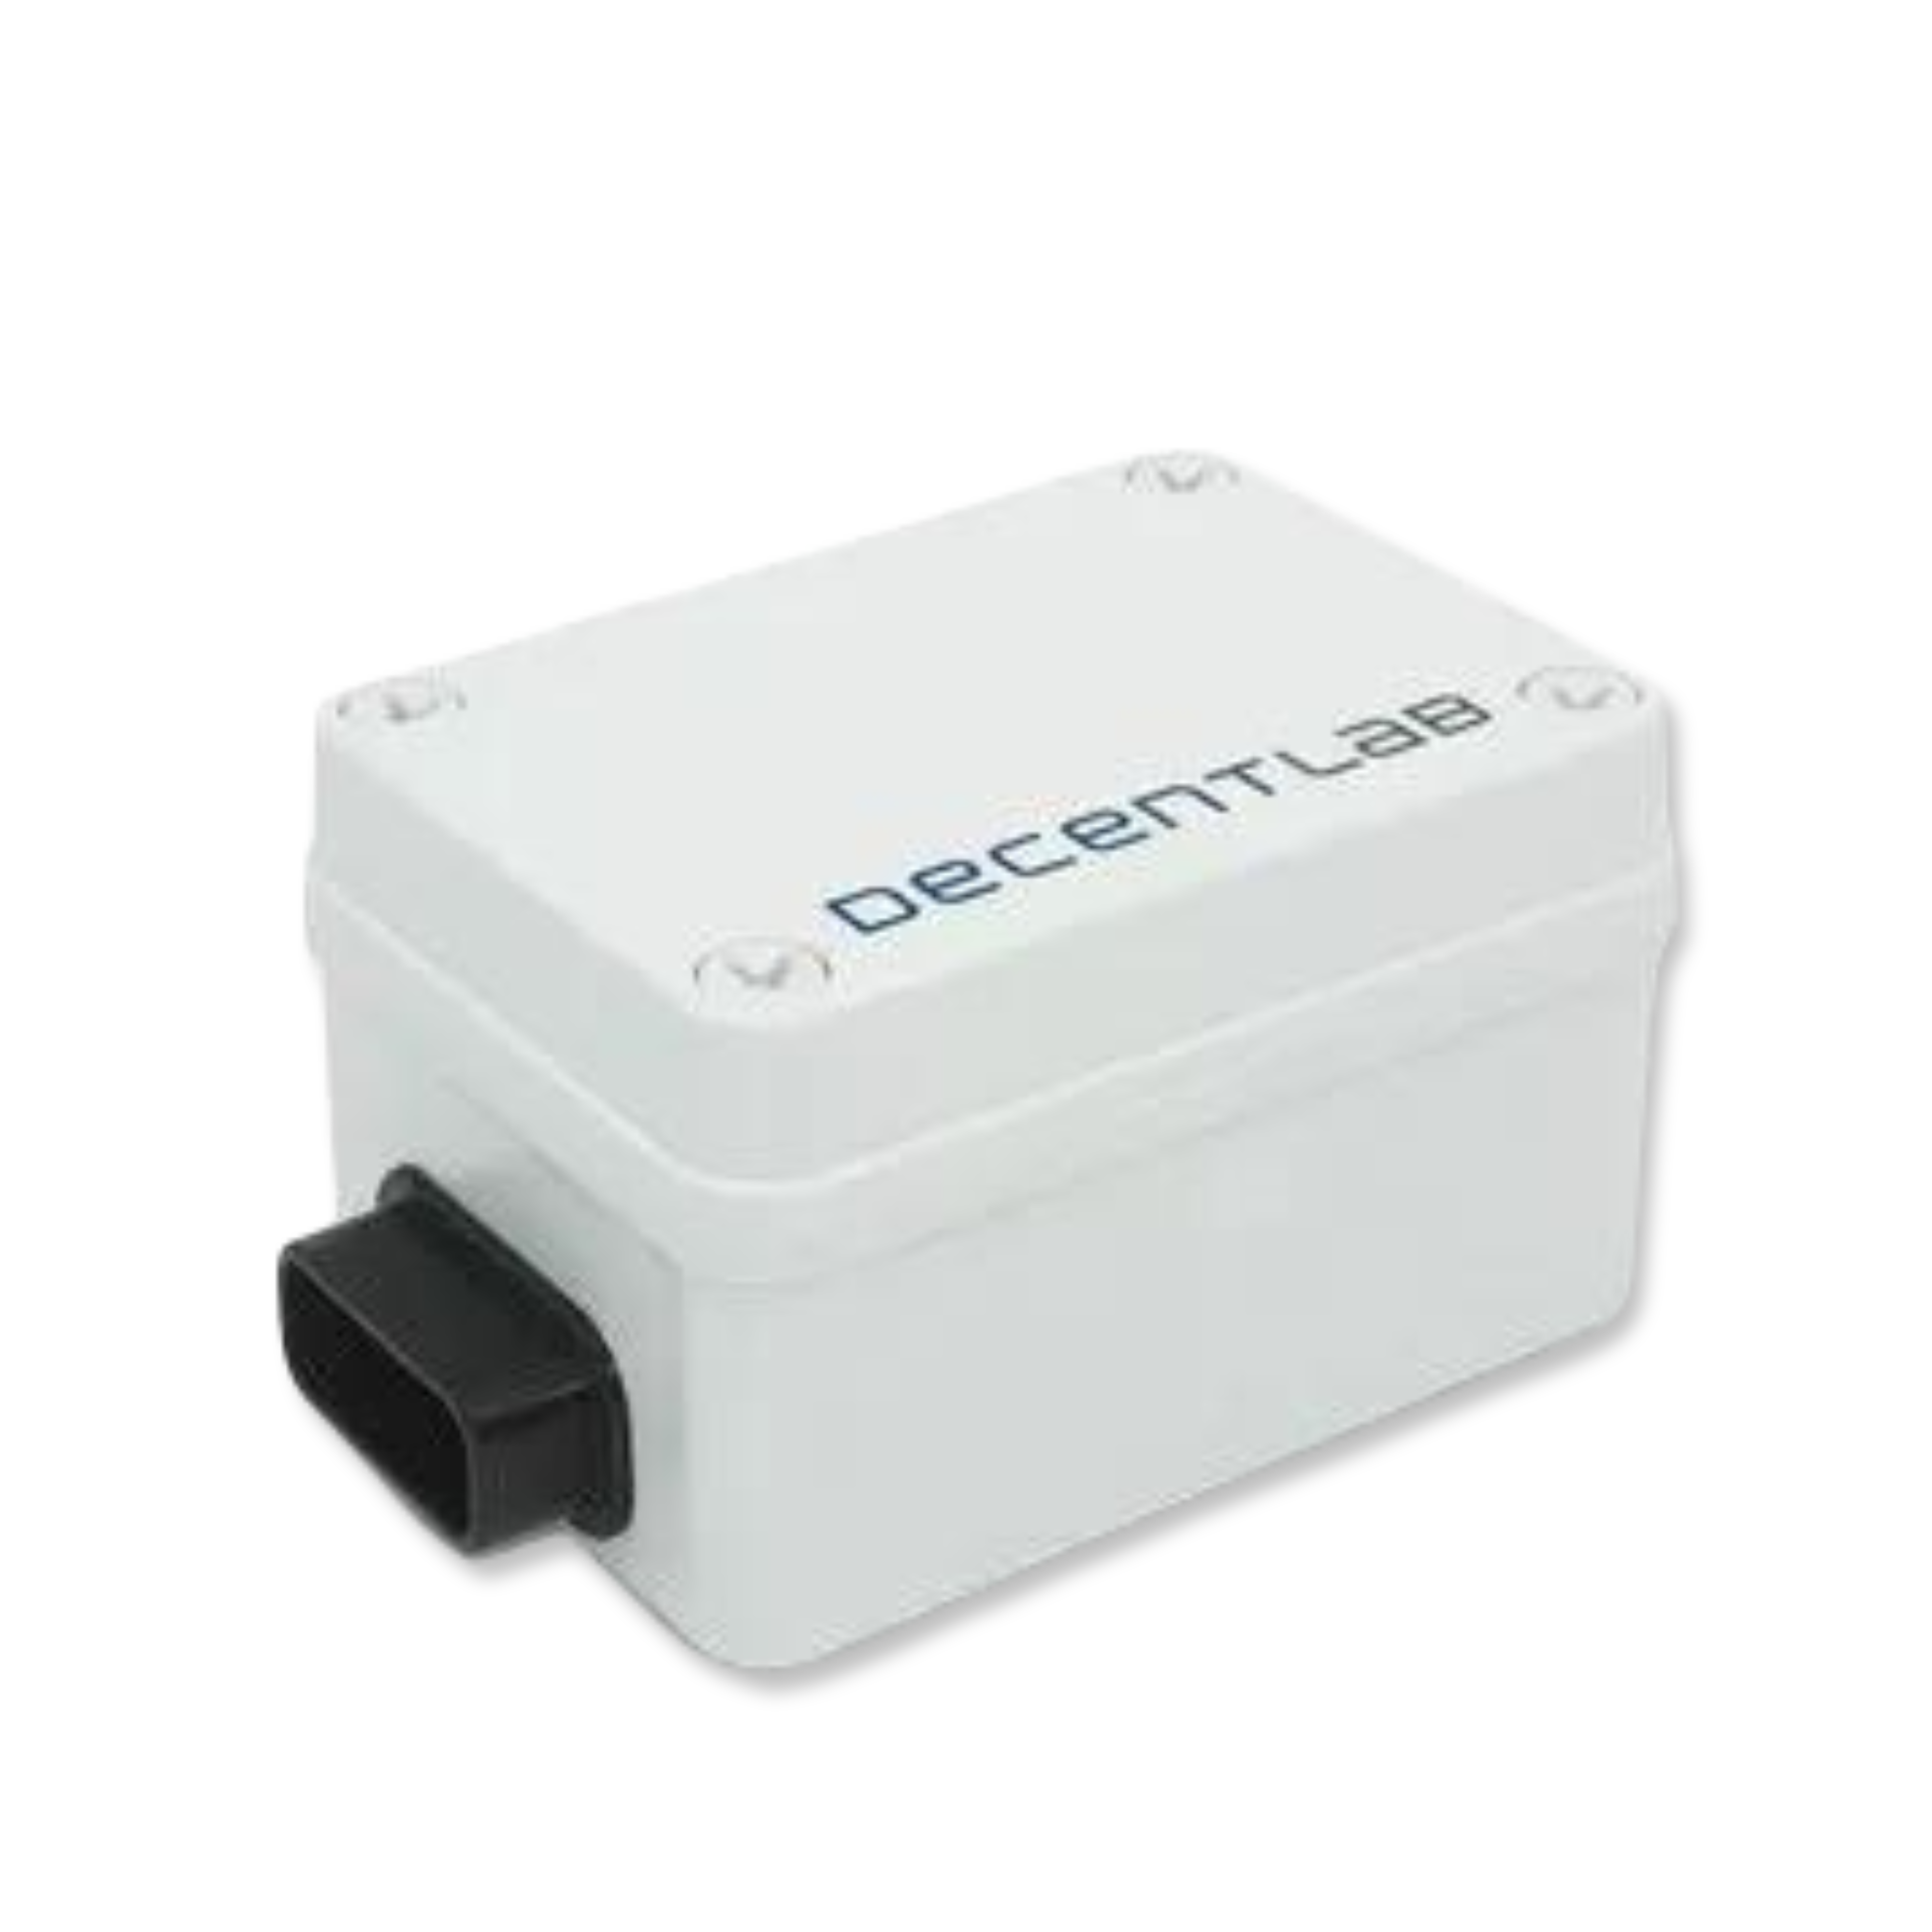 Decentlab Multi-Sensor DL-LP8P for humidity, temperature, air pressure, CO2